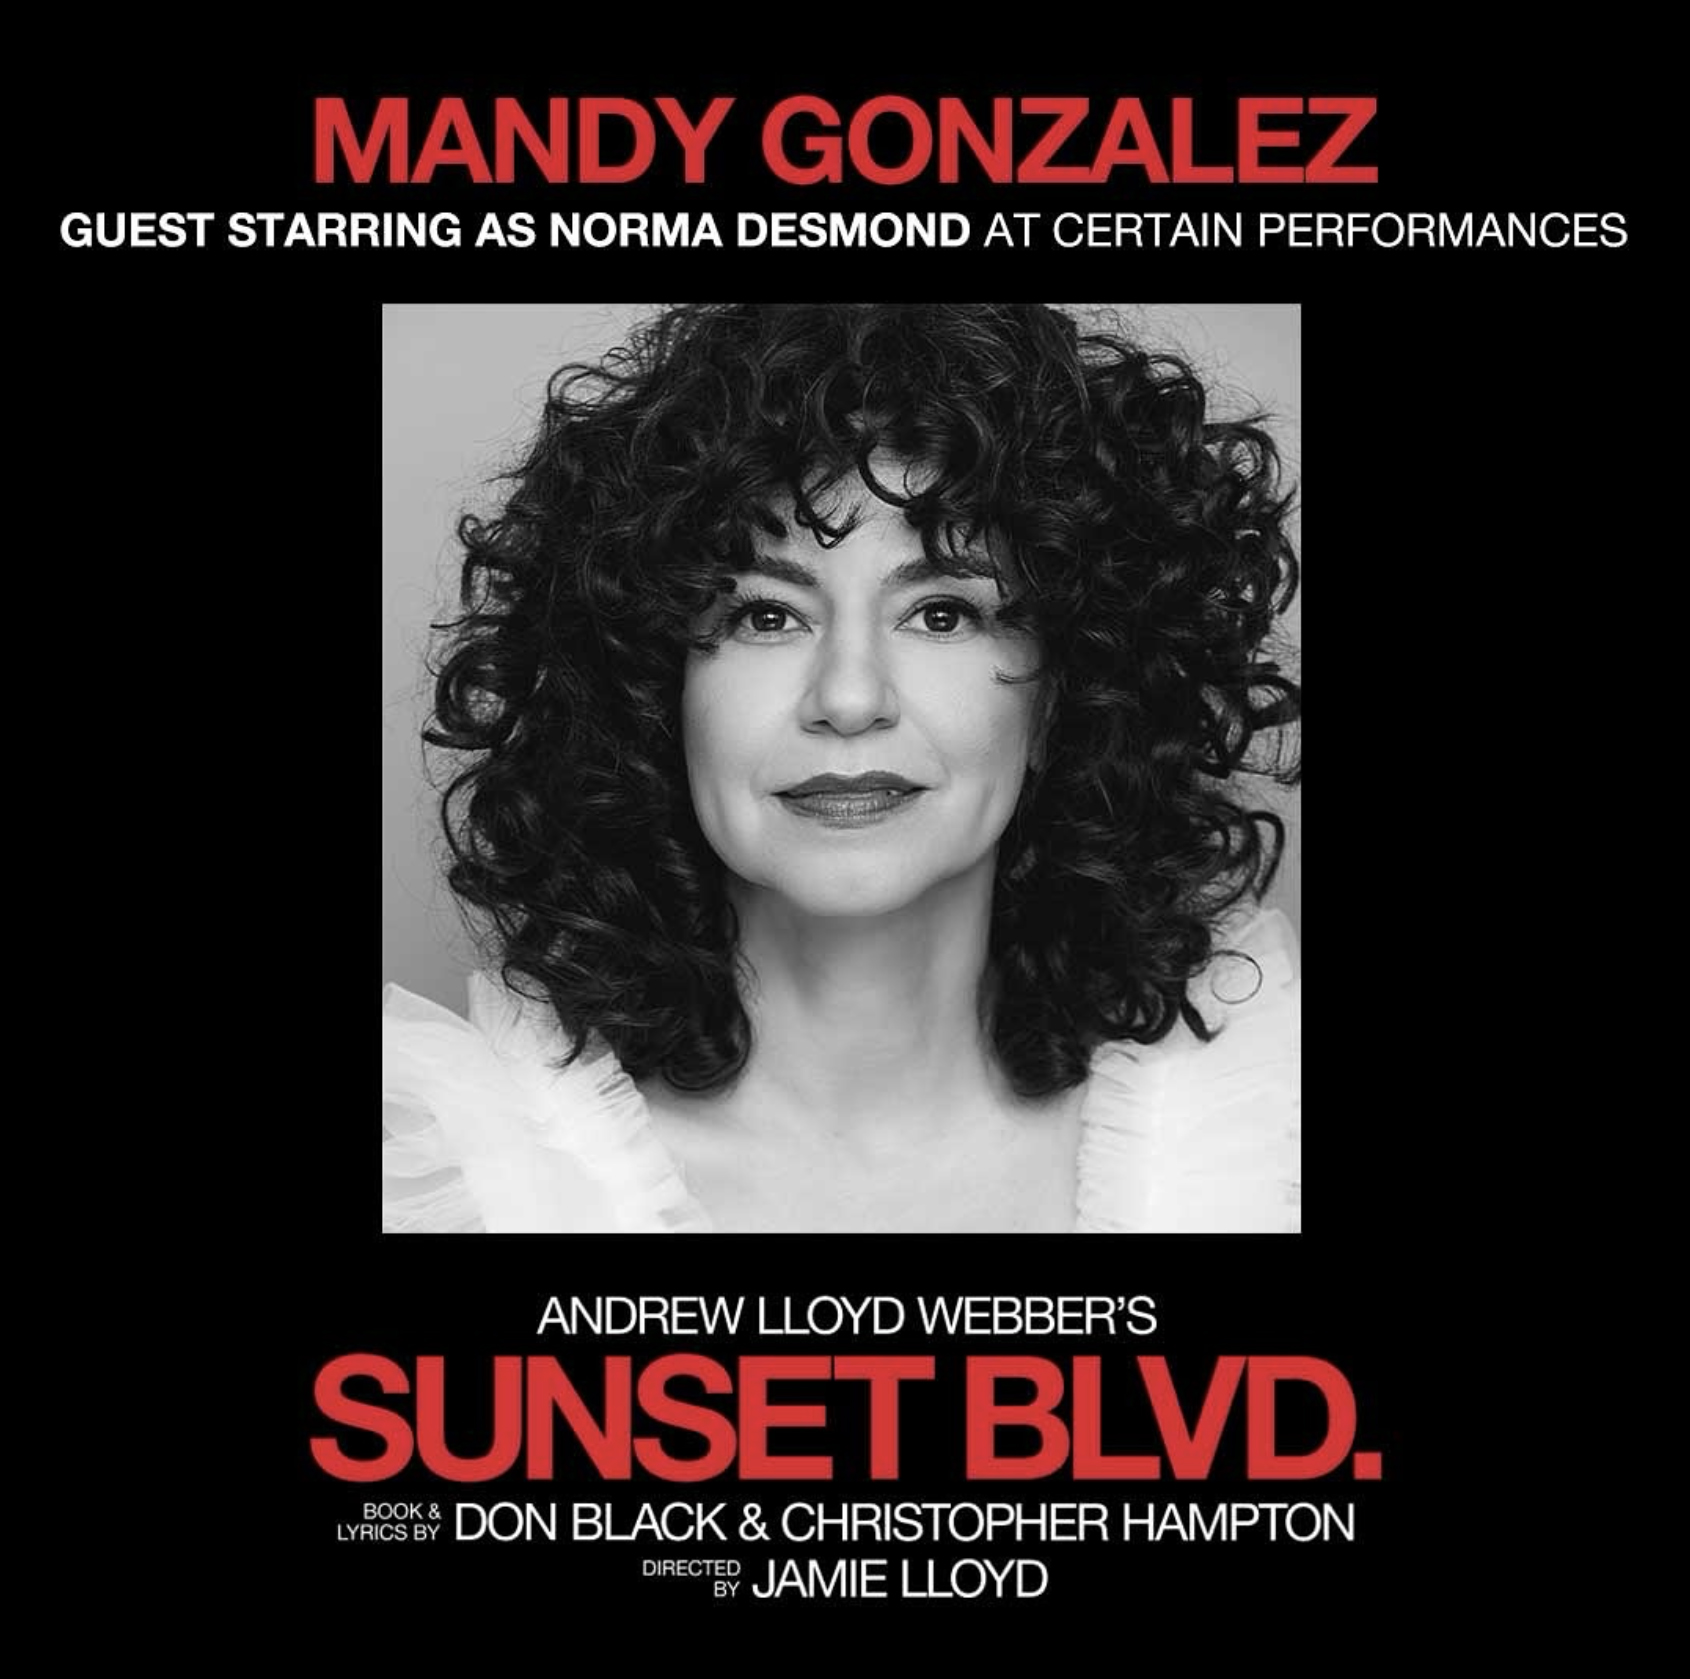 Mandy Gonzalez guest starring as Norma Desmond at certain performances. Sunset Boulevard on Broadway.